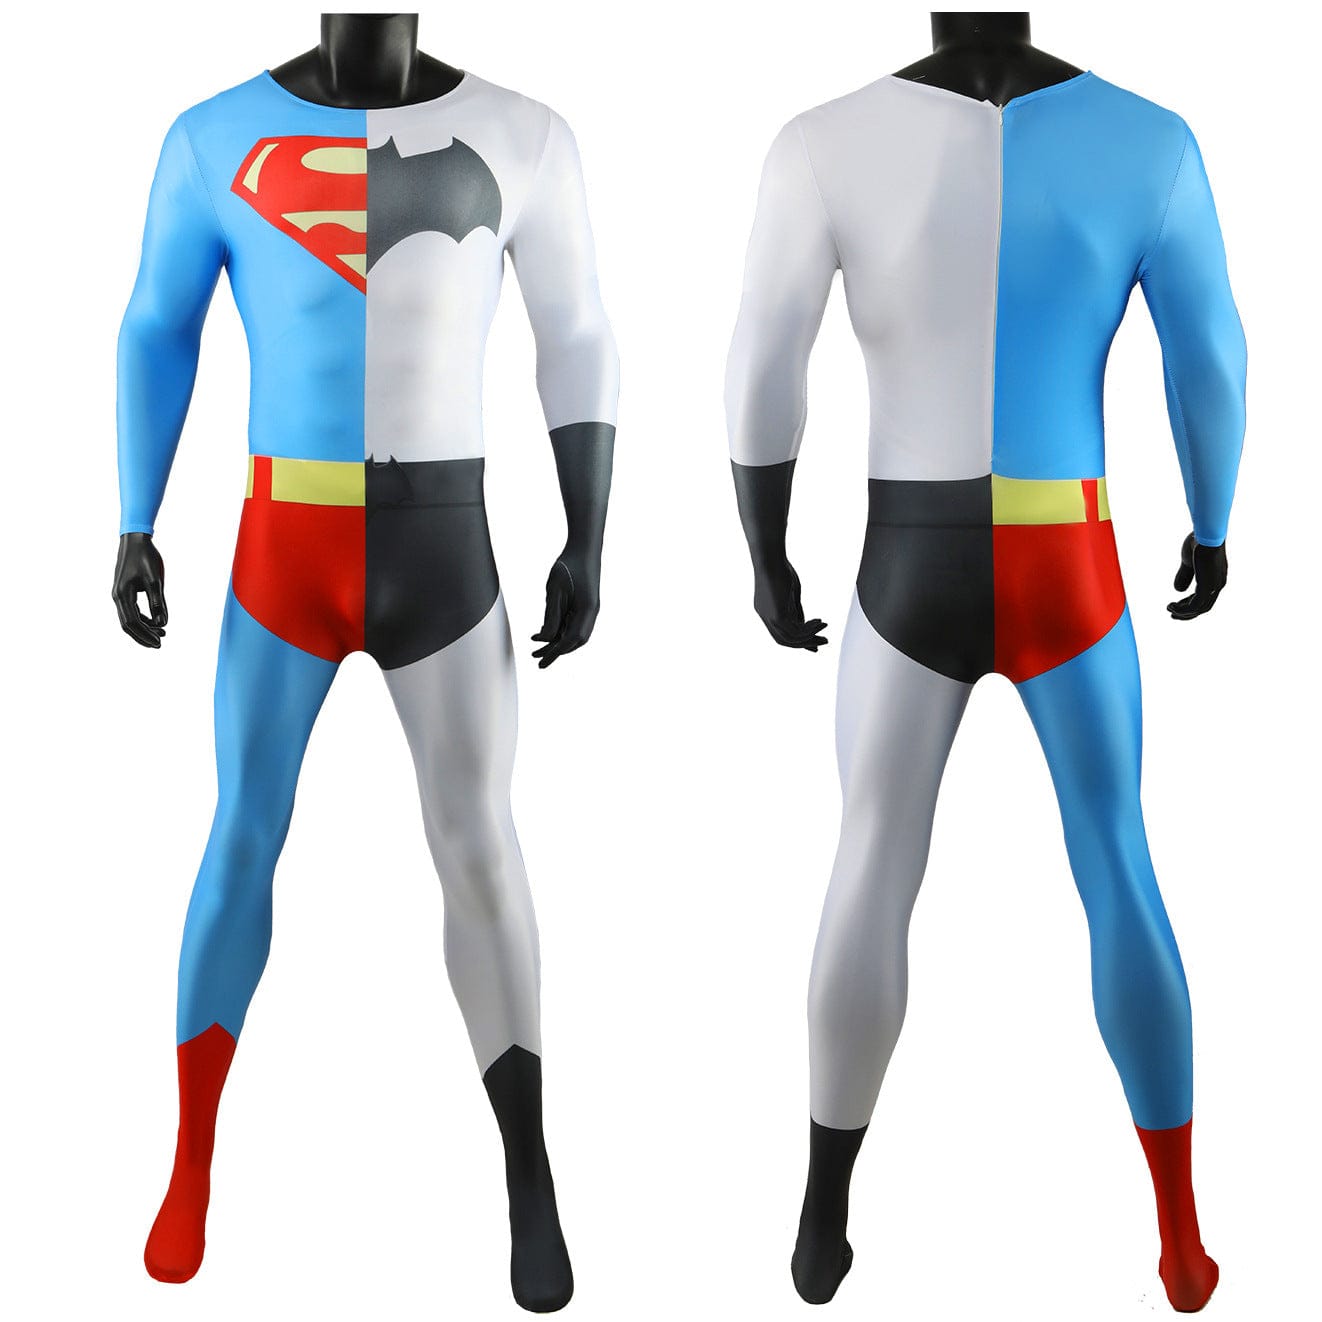 Superman and Batman Combined Jumpsuits Costume Adult Halloween Bodysuit